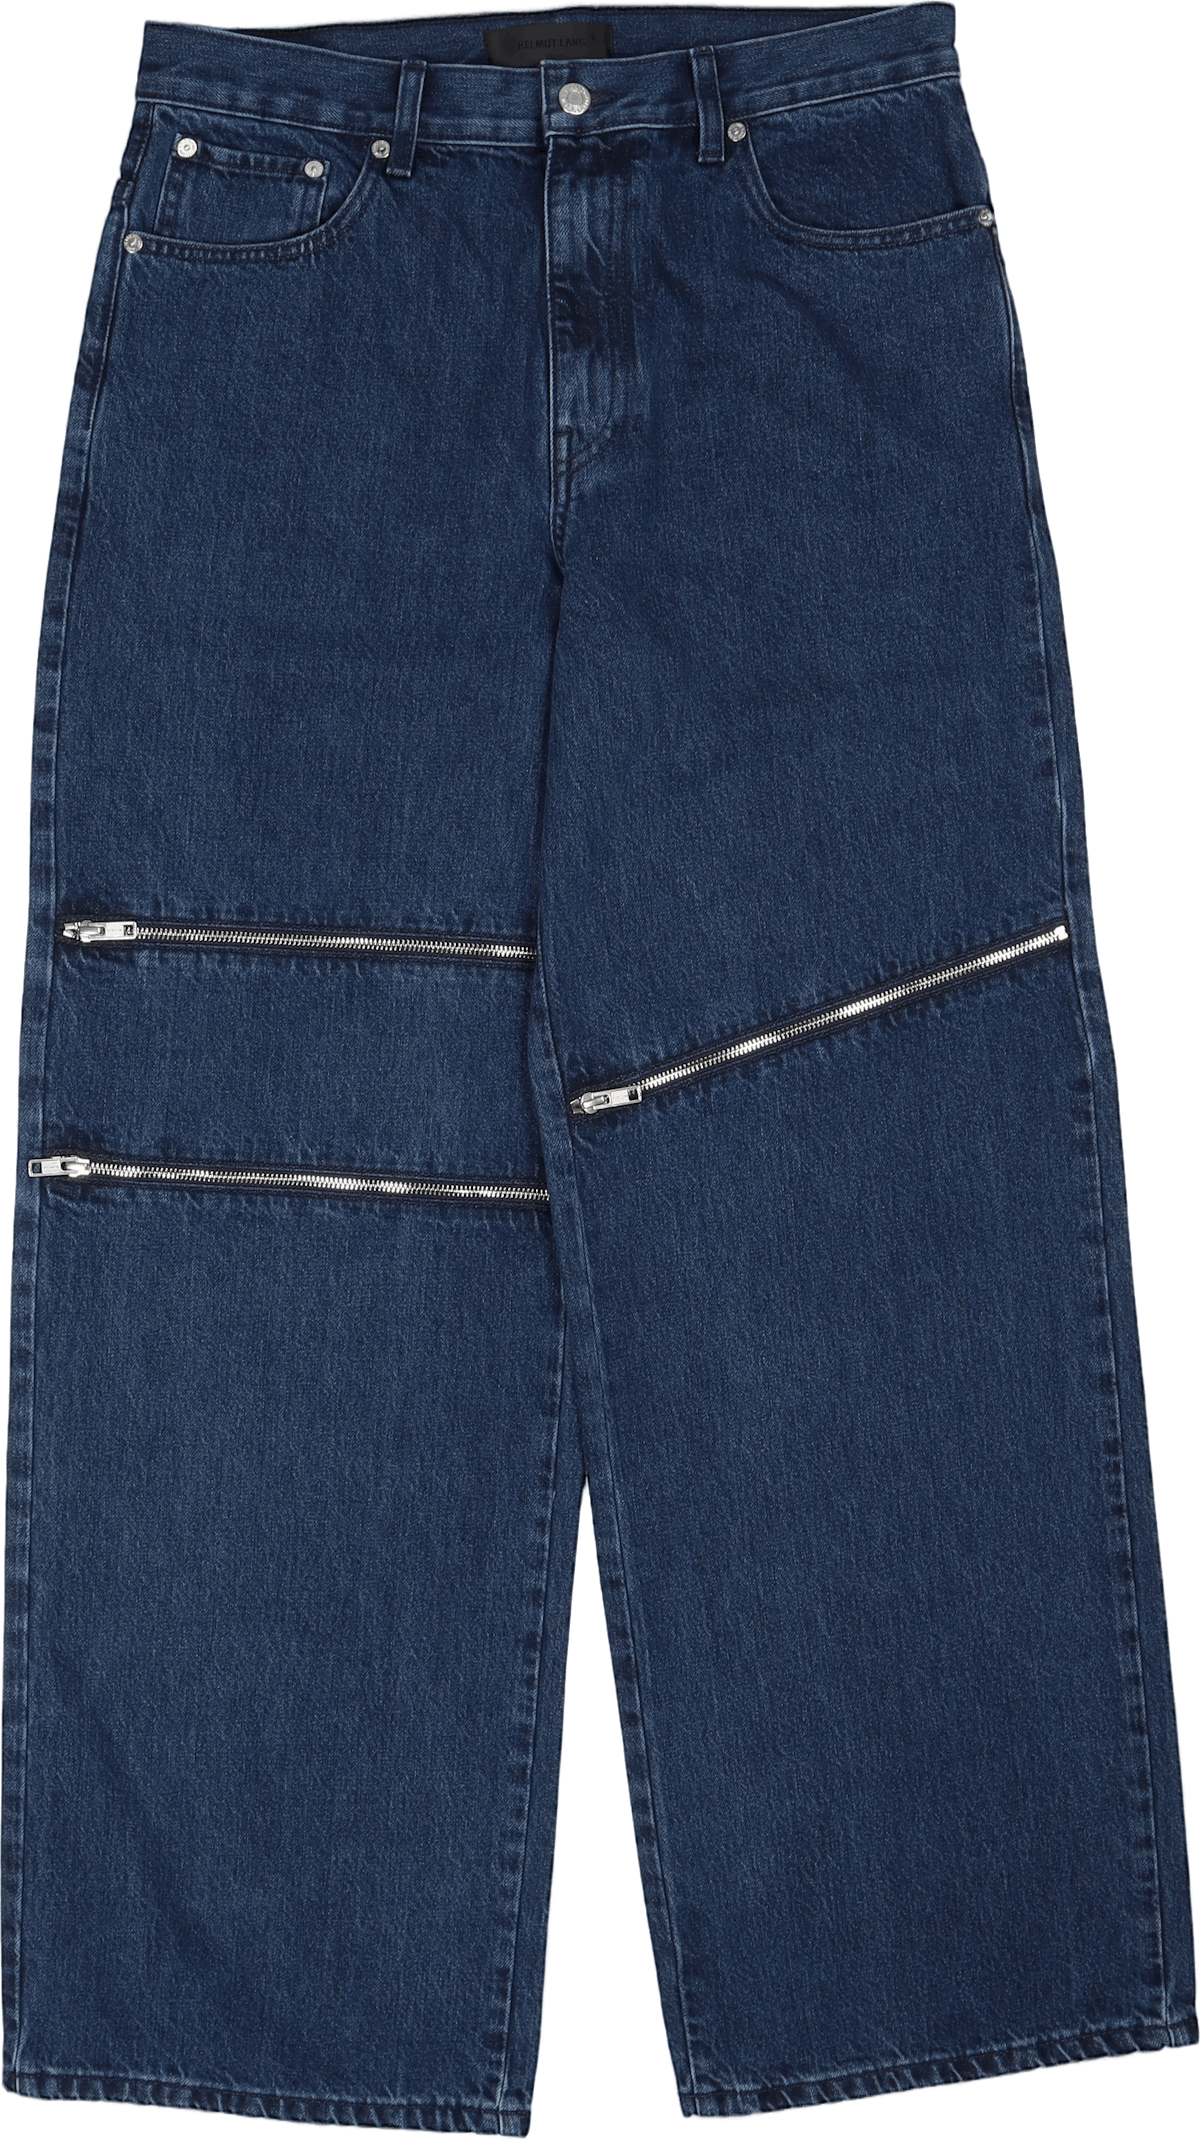 Zip Jeans.indigo Indigo